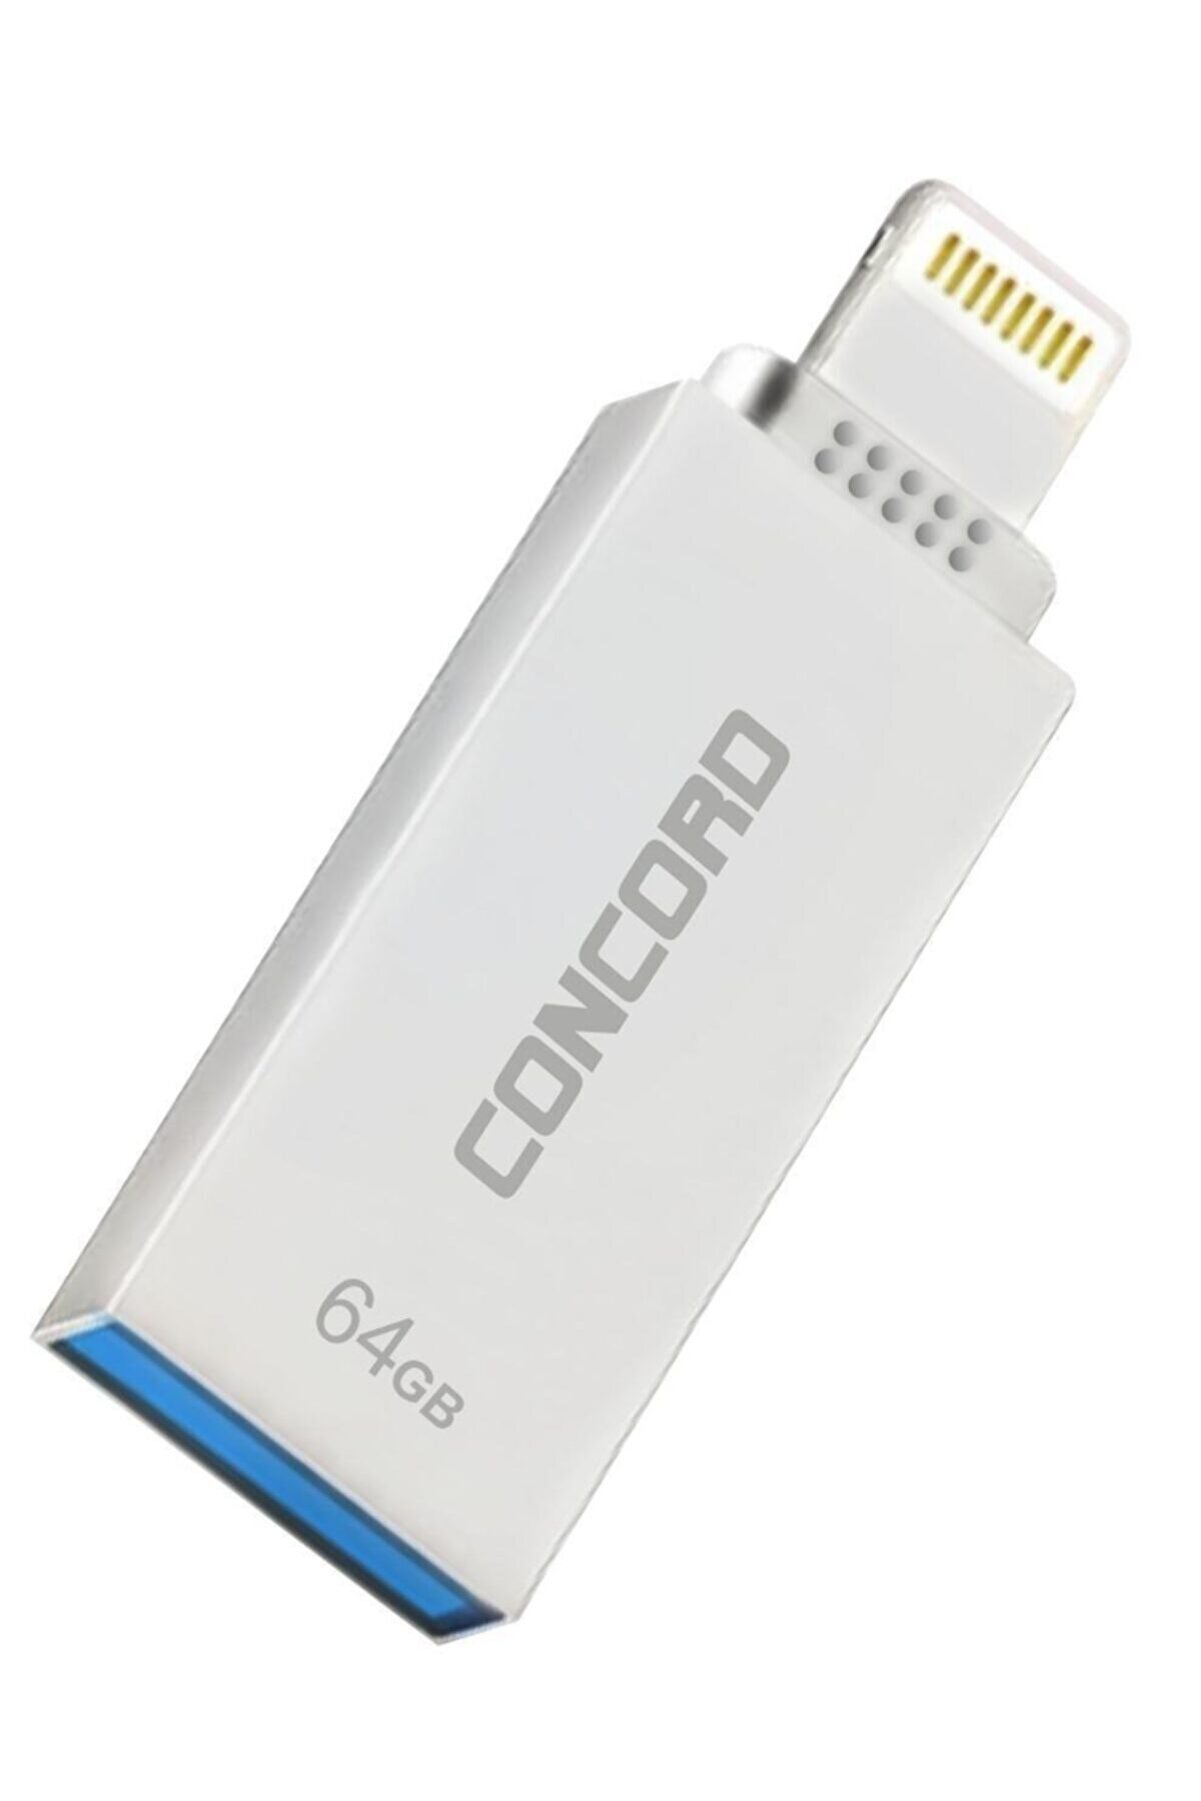 Concord Cotgl64 64gb Lightning Apple Usb 3.0 Otg Metal Usb Flash Bellek